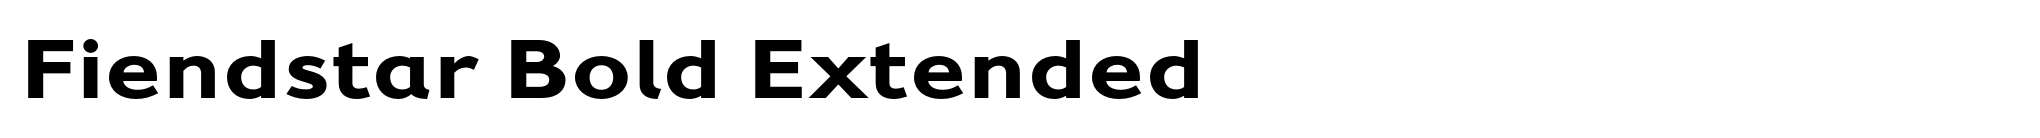 Fiendstar Bold Extended image